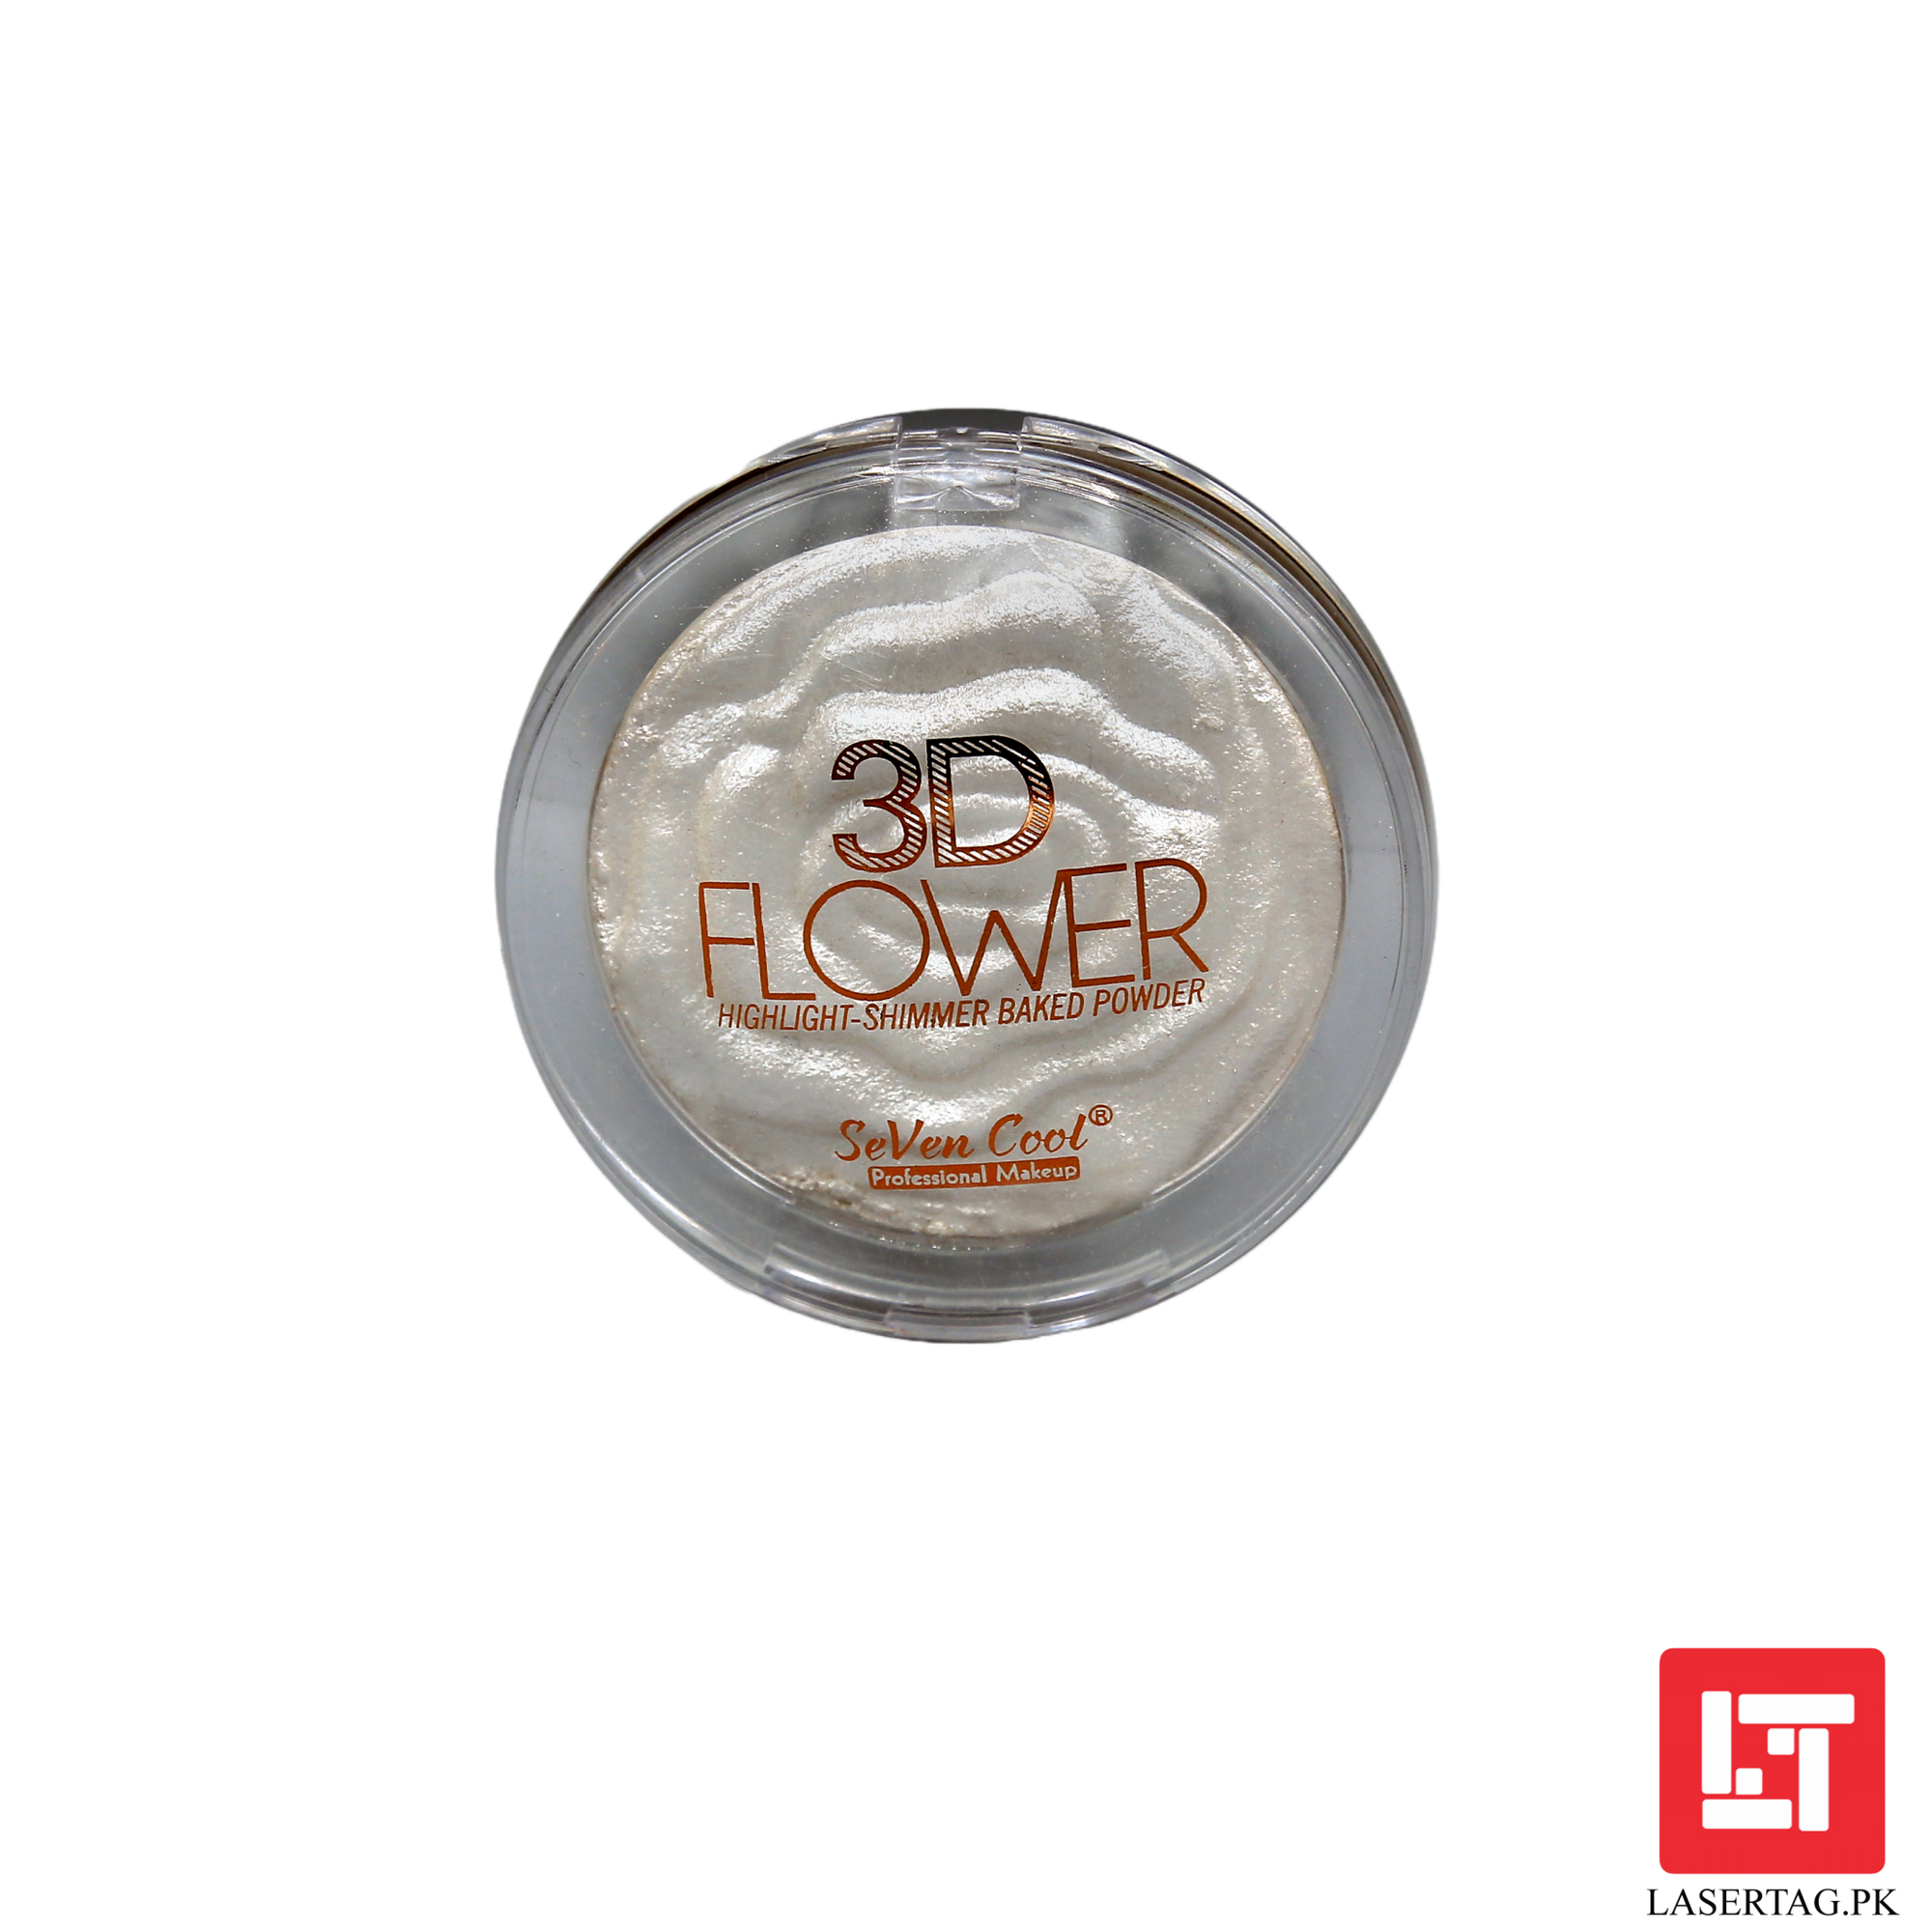 Seven Cool 3D Flower Highlighter Shimmer Baked Powder Shade#1 freeshipping - lasertag.pk